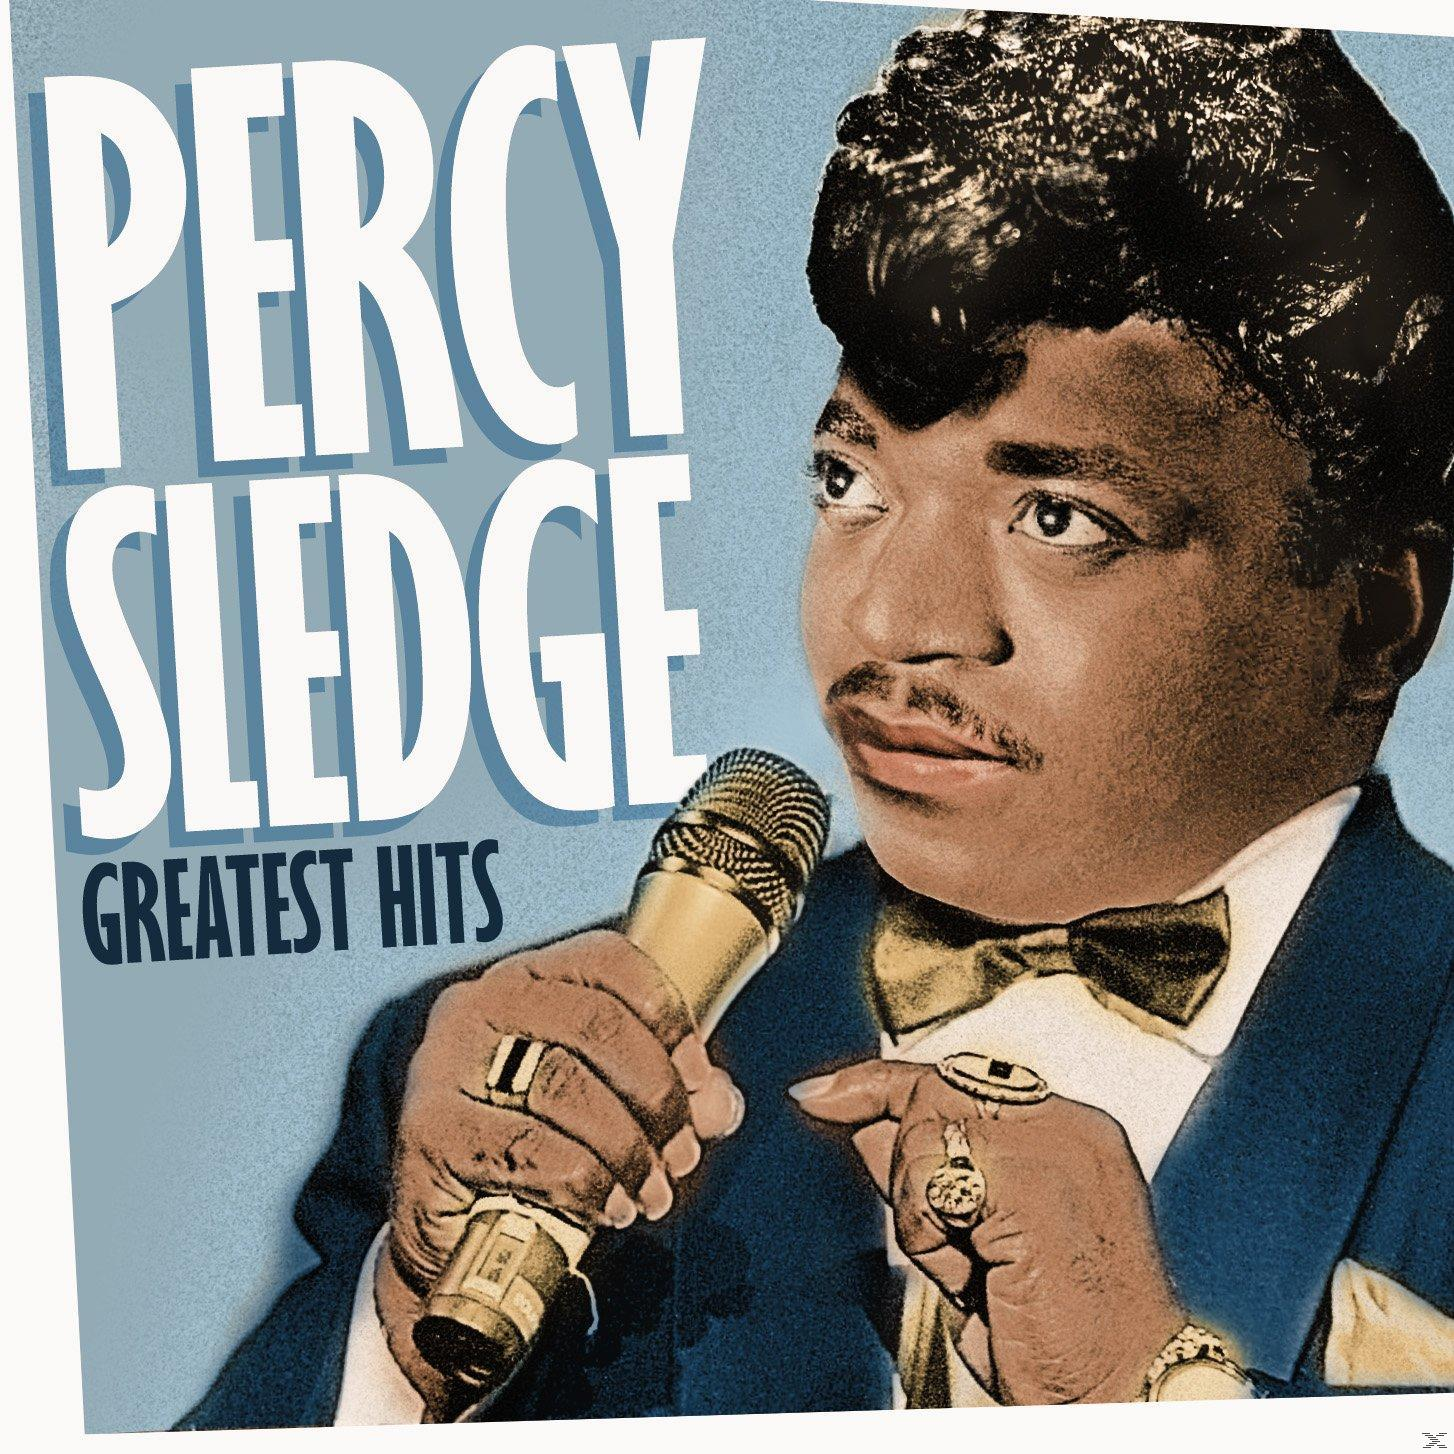 Percy Sledge - (CD) Hits - Greatest